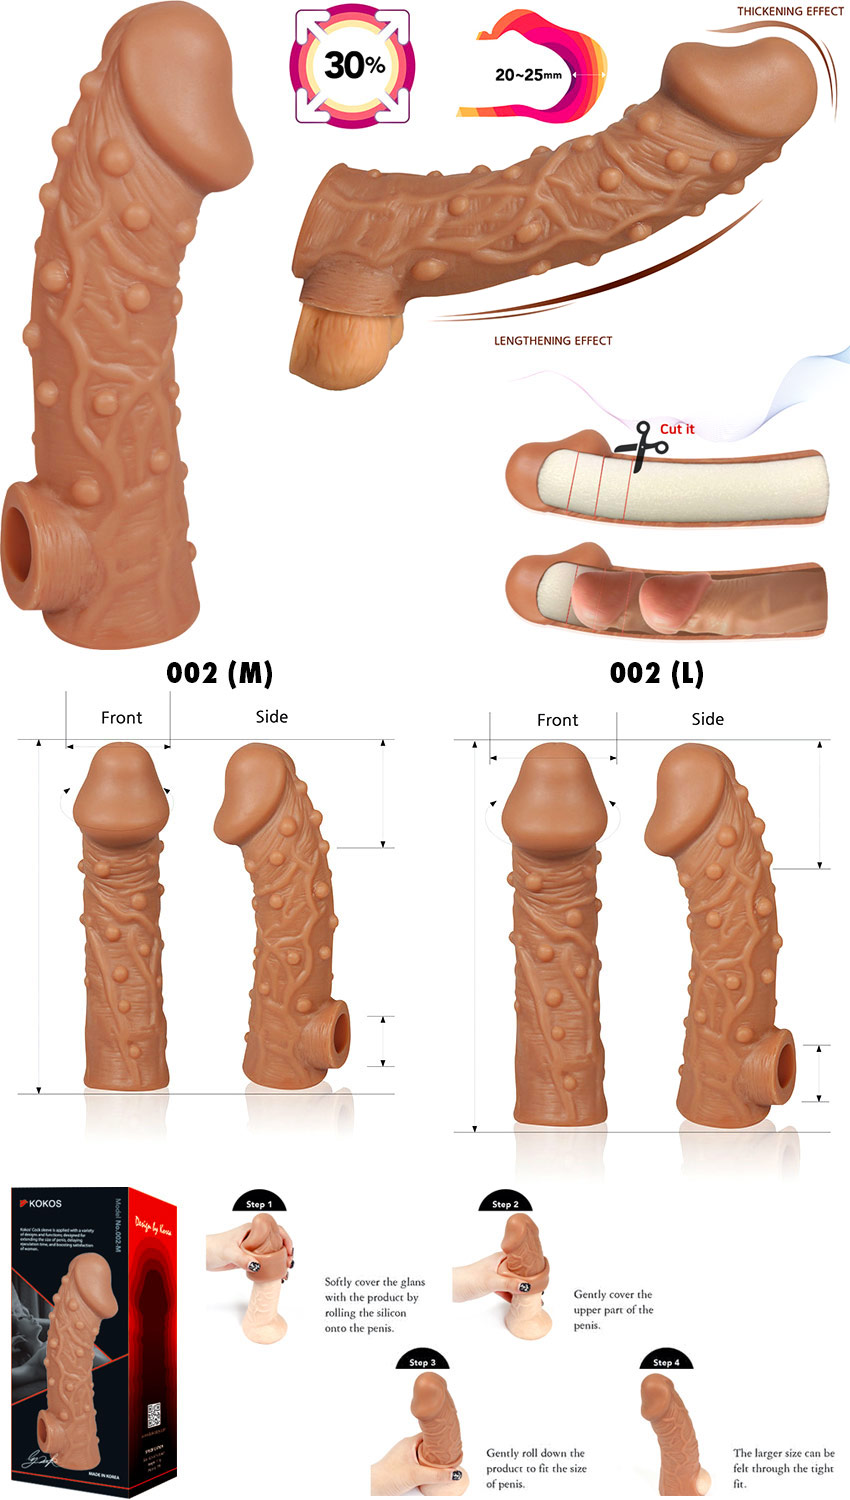 Kokos 002 stimulating and enlarging penis sleeve (L)